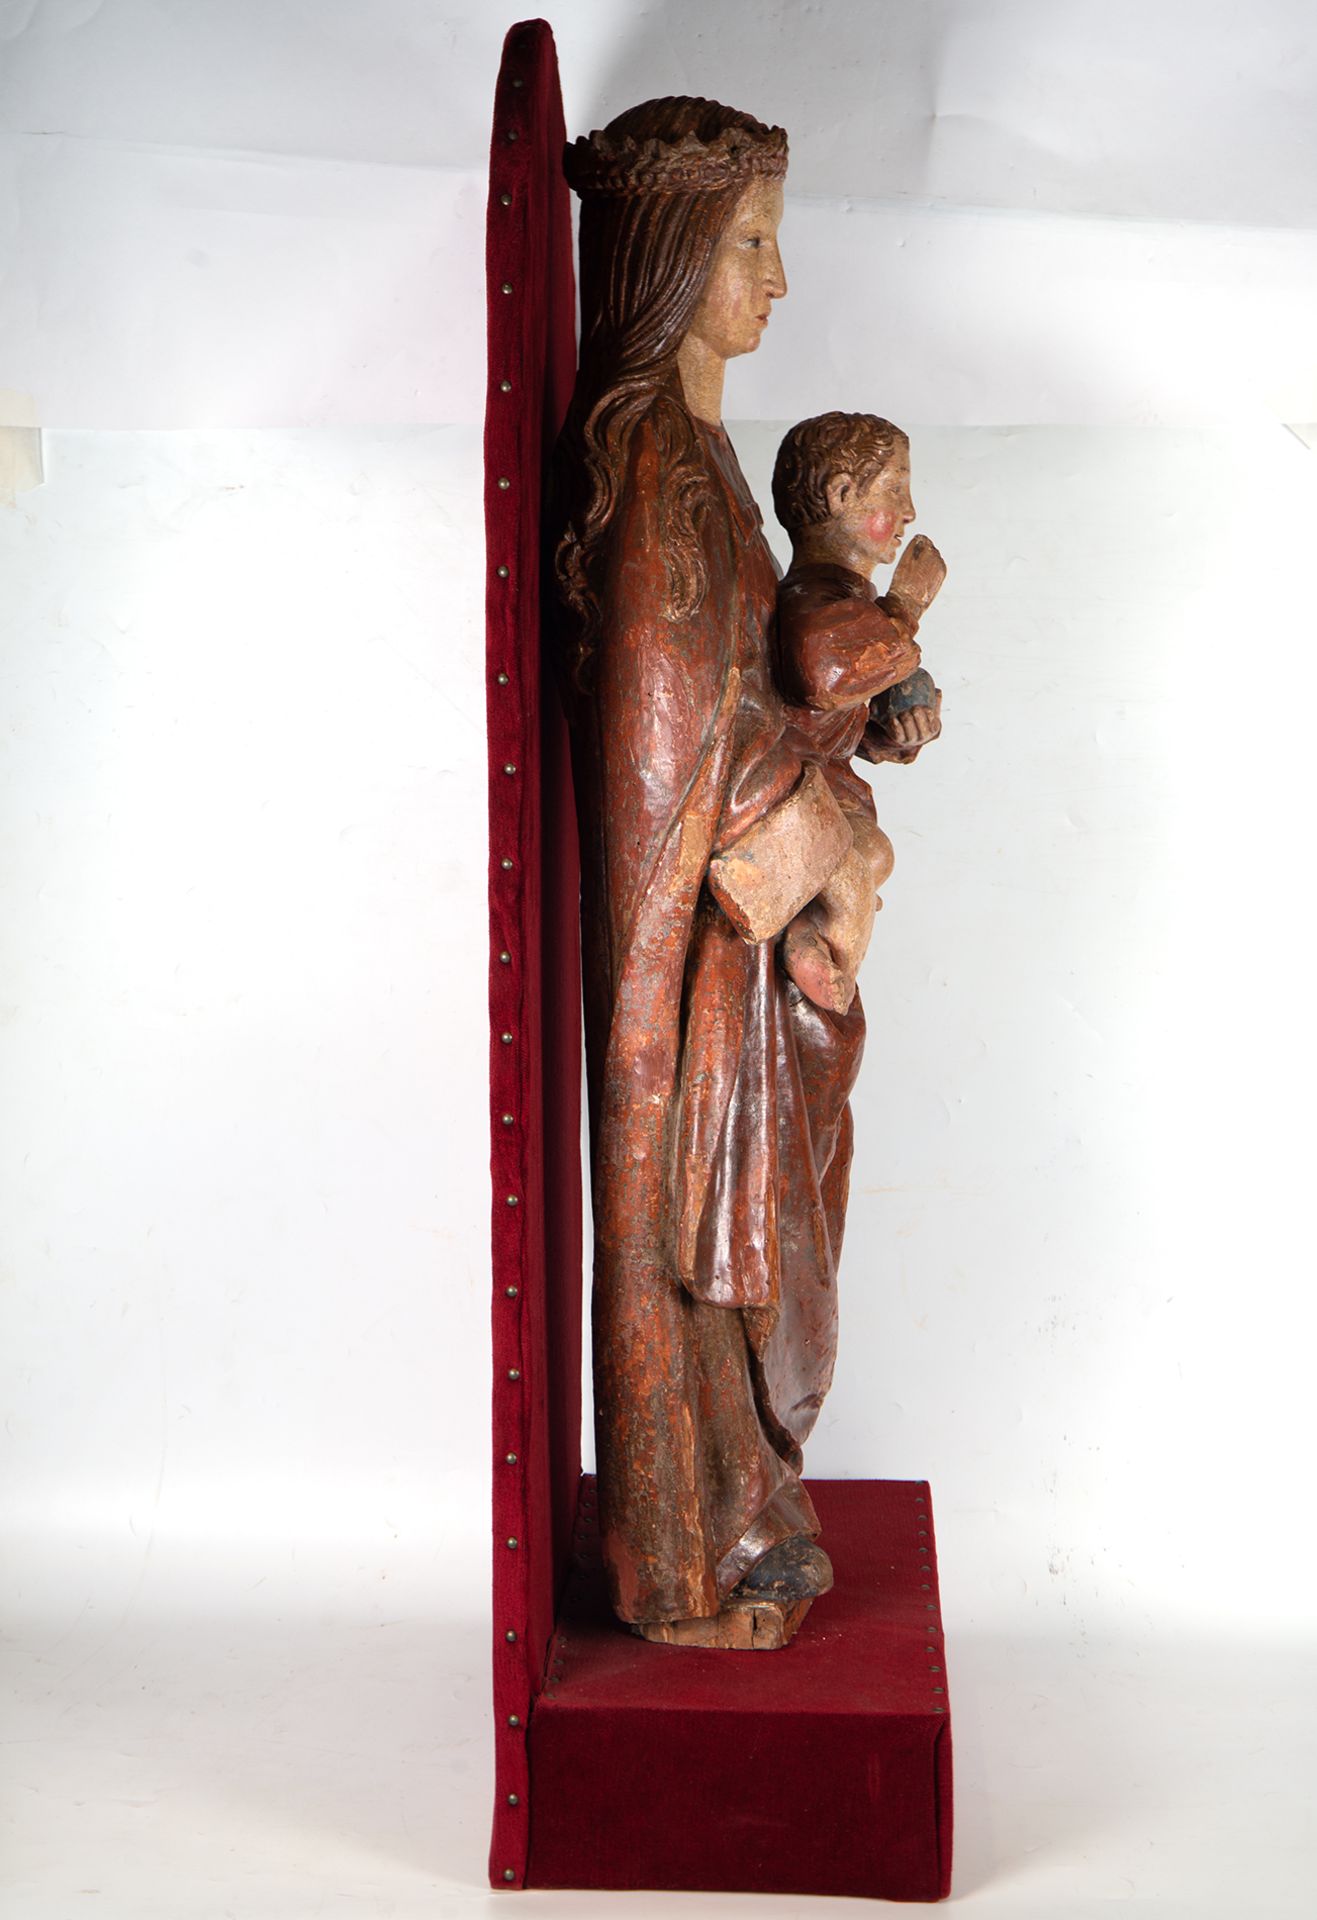 Large Virgin of Mechelen with Child in Arms, school of Mechelen, XV - XVI century - Image 10 of 18